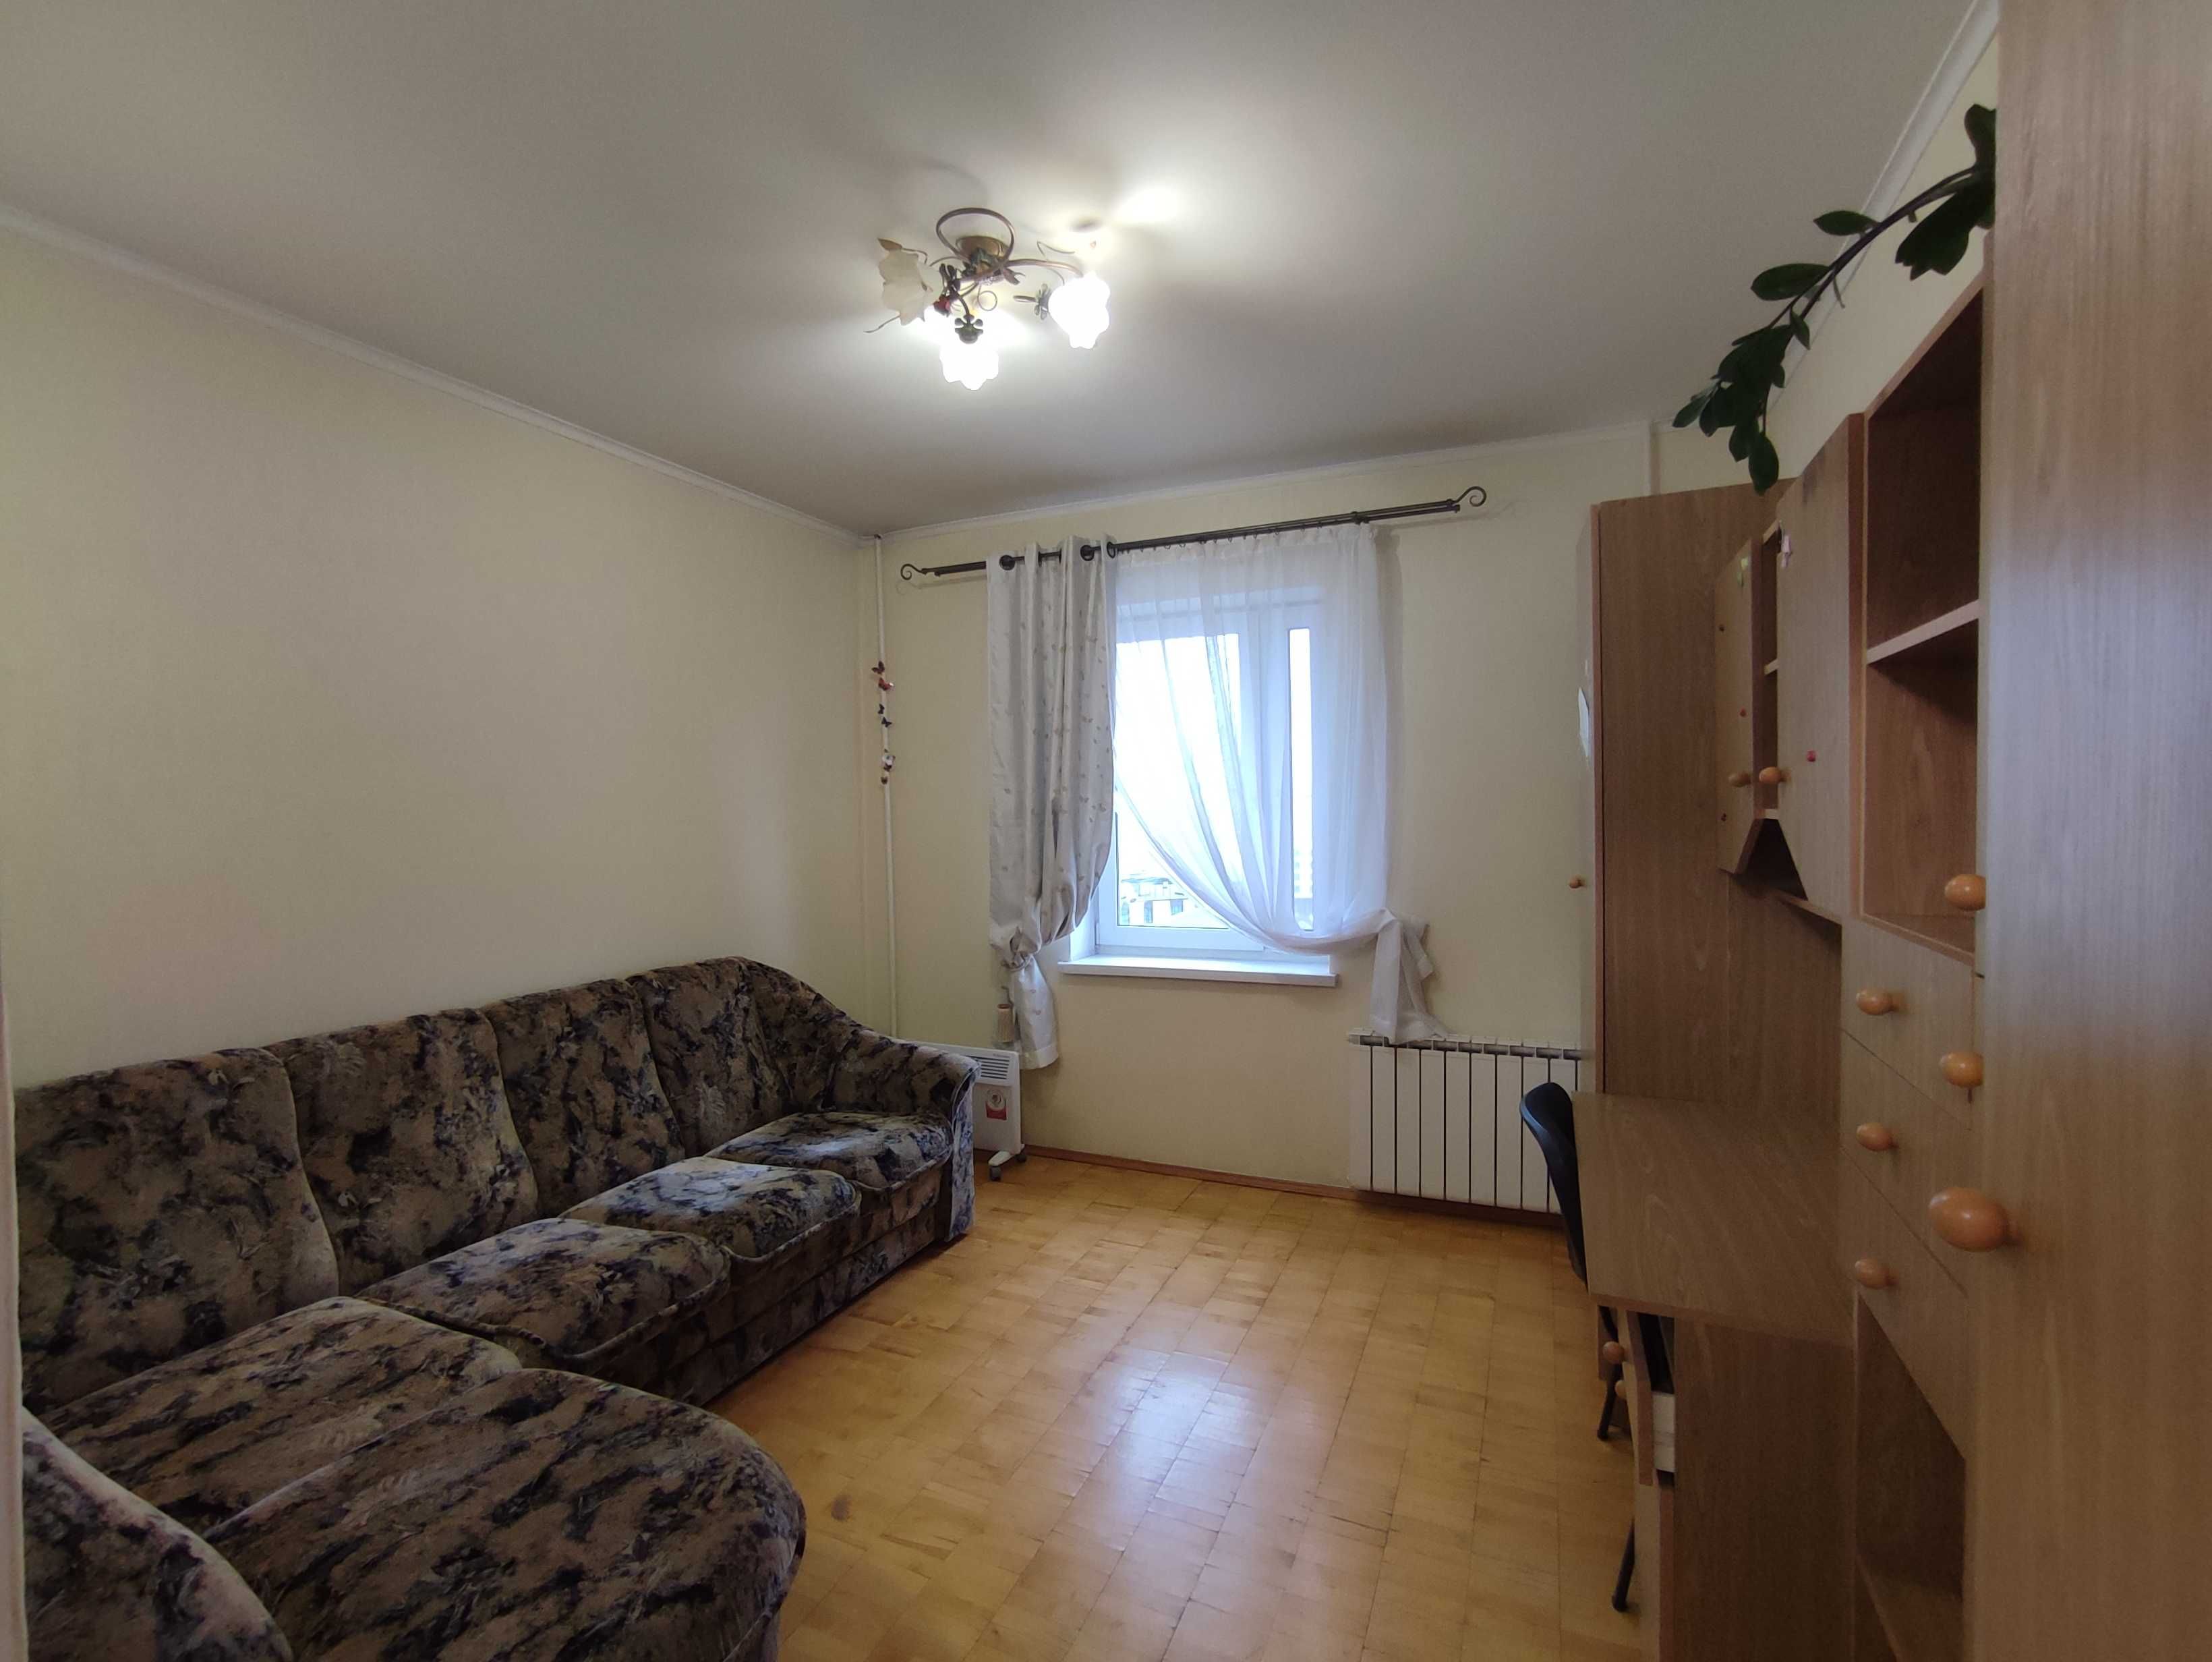 Руденко 3а. 3-комн теплая квартира в комфортном месте. без комиссий.